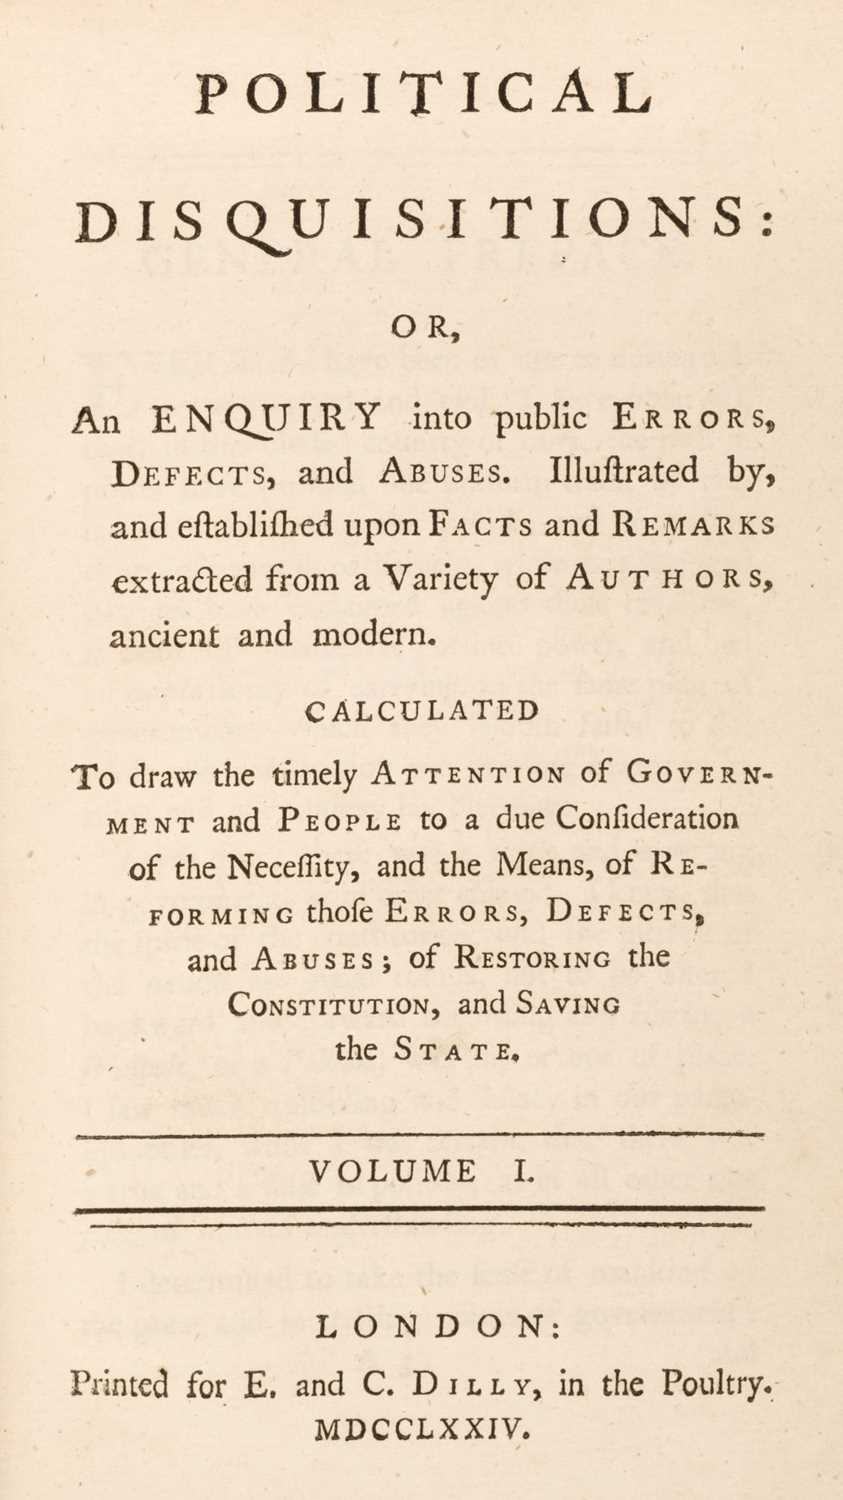 Lot 338 - Burgh (James). Political Disquisitions, 1st edition, volumes 1 & 2, 1774